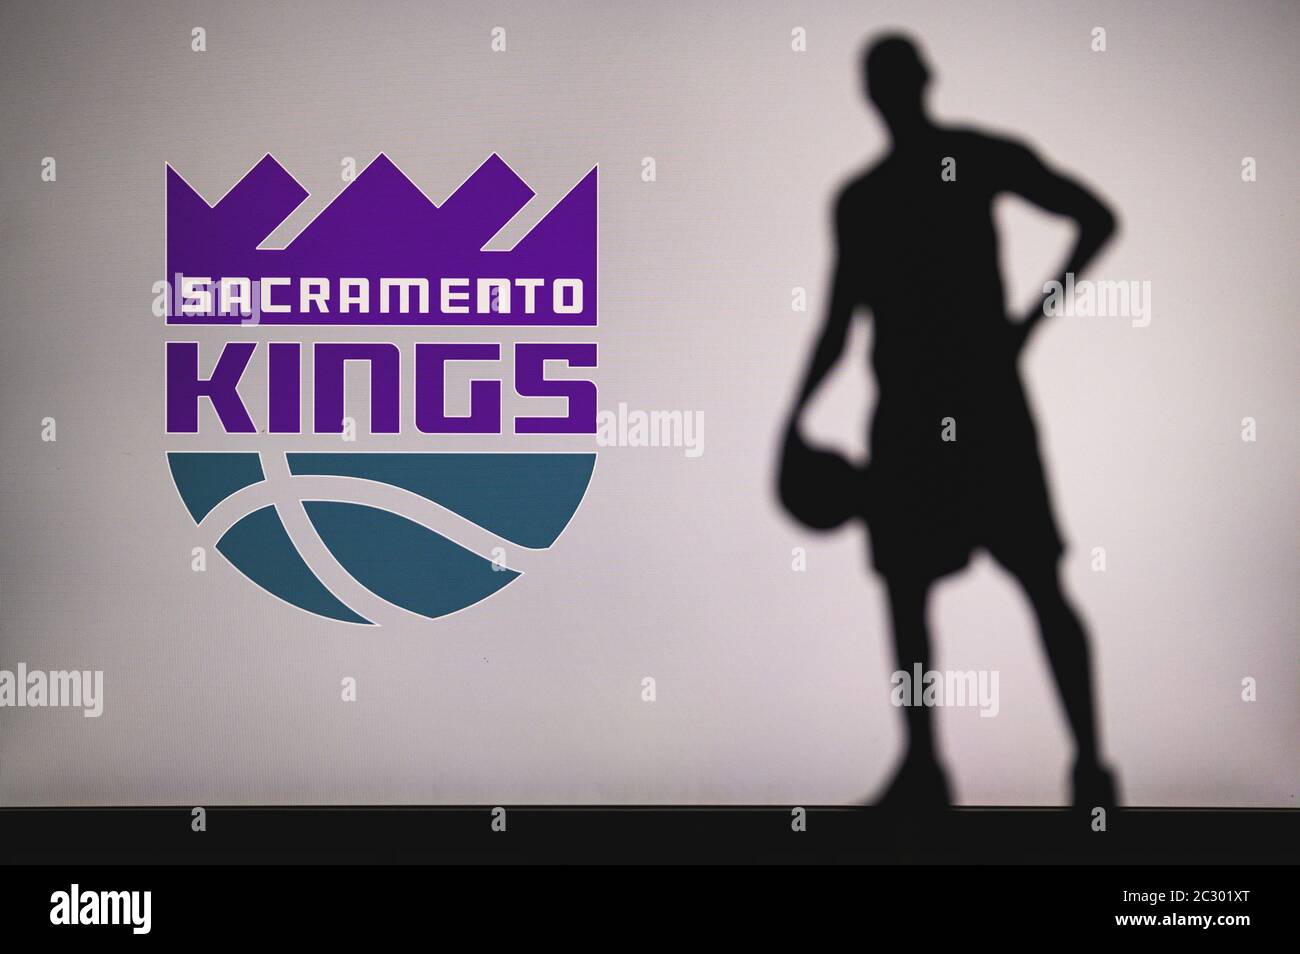 Sacramento Kings Wallpapers  Basketball Wallpapers at